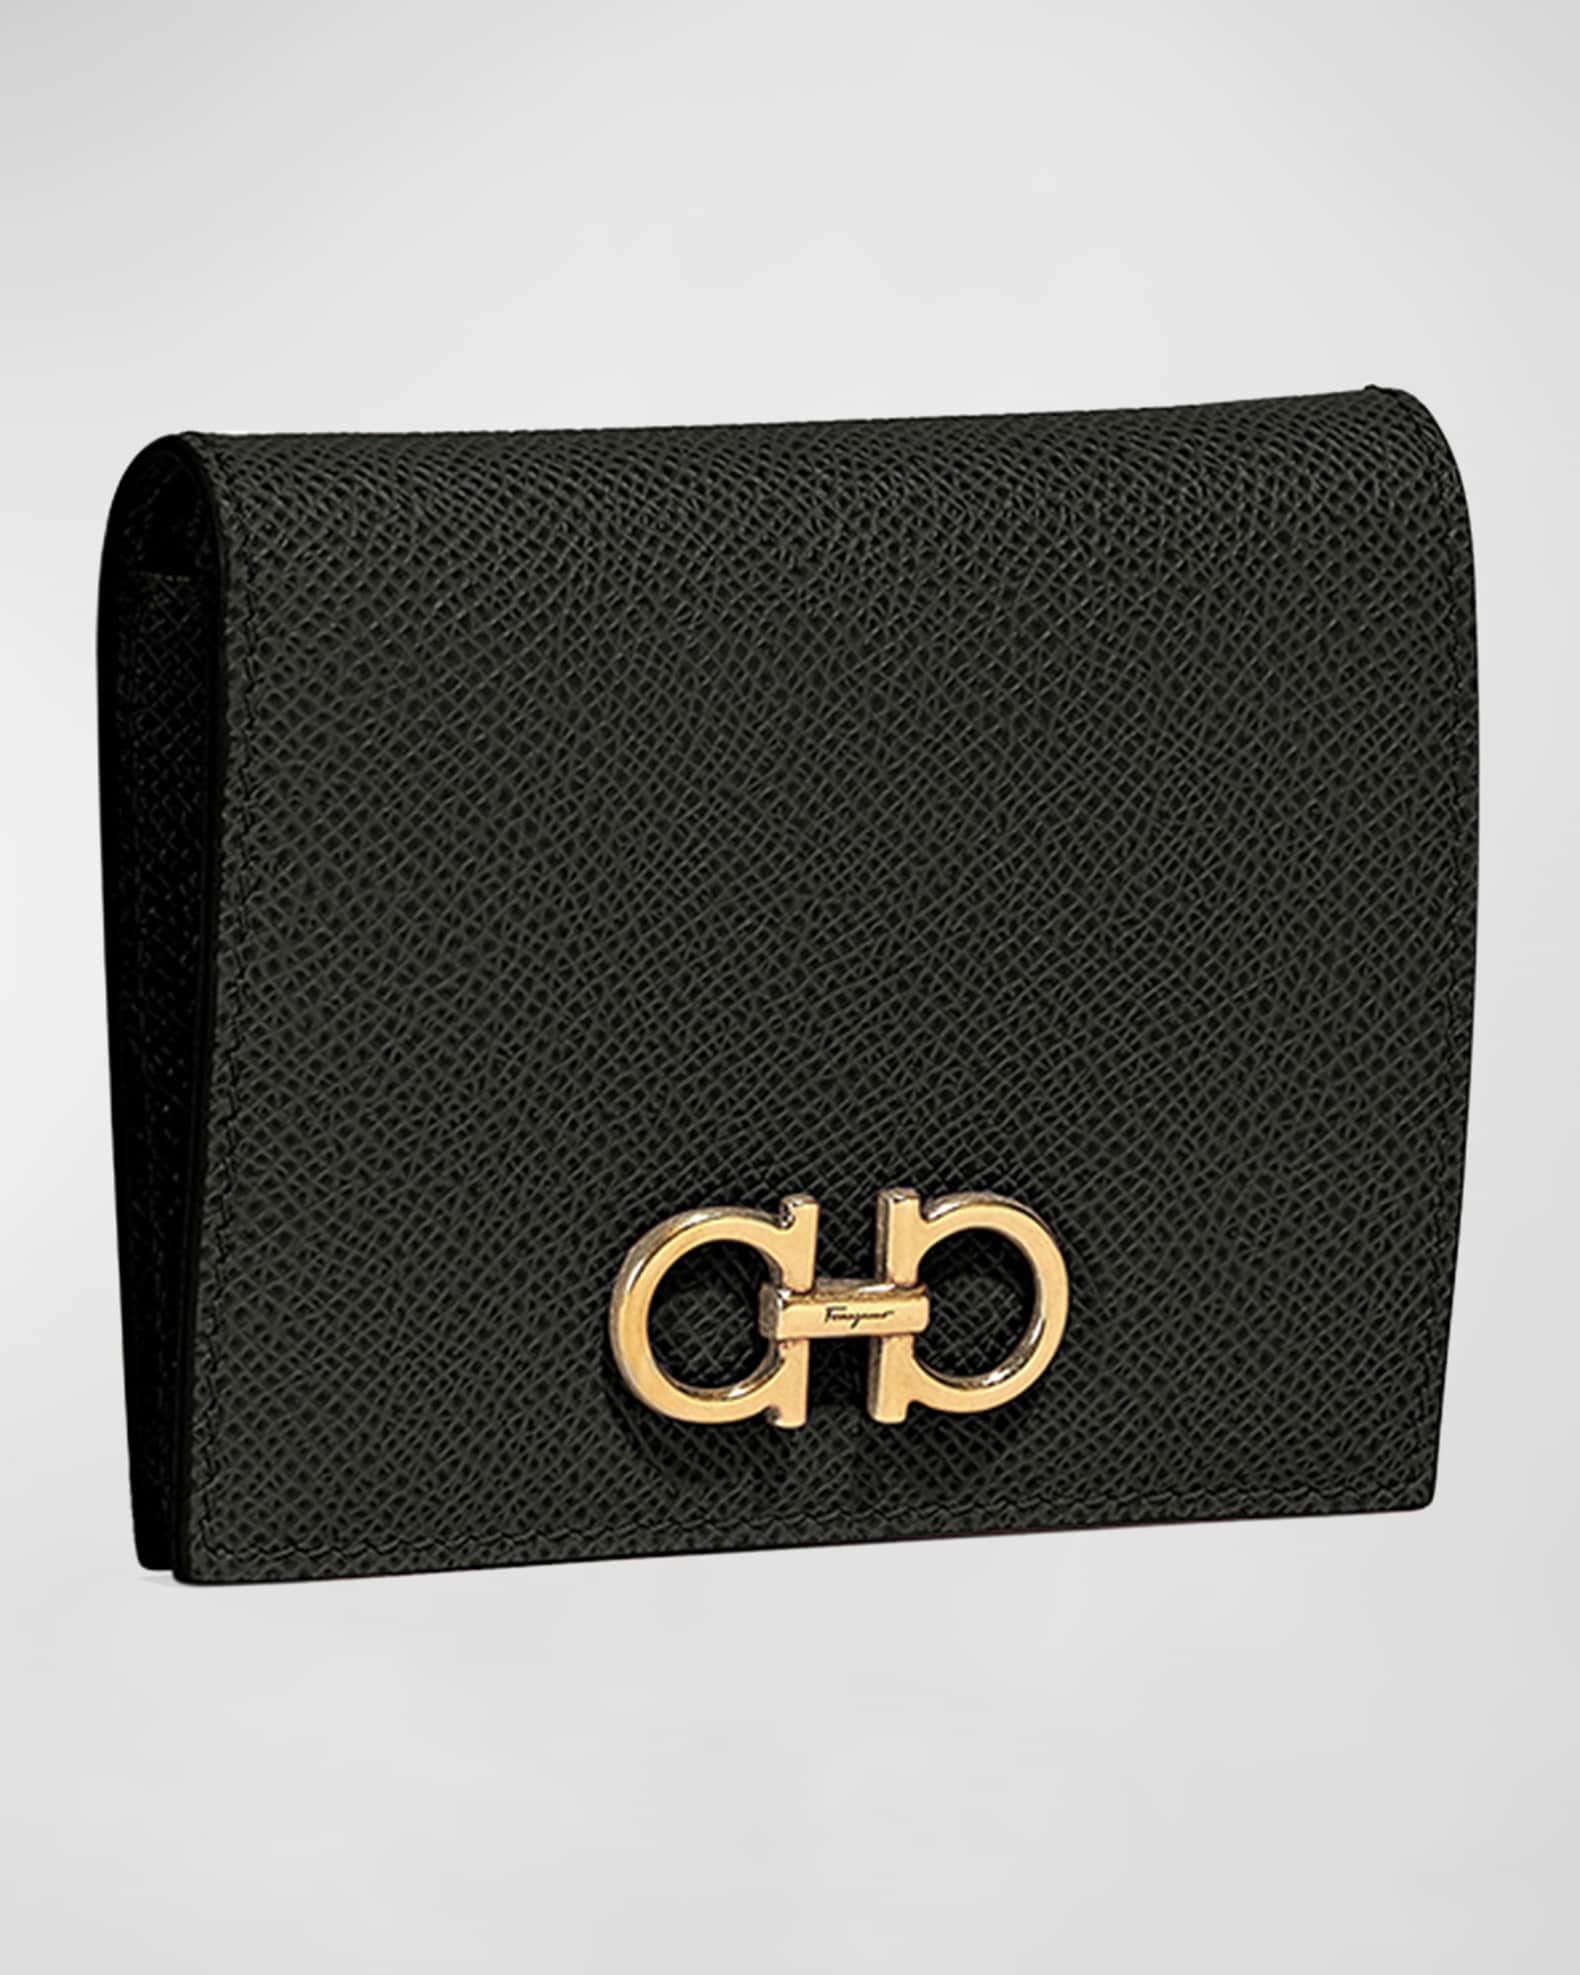 Luxury Designer Wallet for Men Patchwork Leather Short Wallet Casual Buckle  Coin Purse Brand Trifold Wallet Men Clutch Money Bag